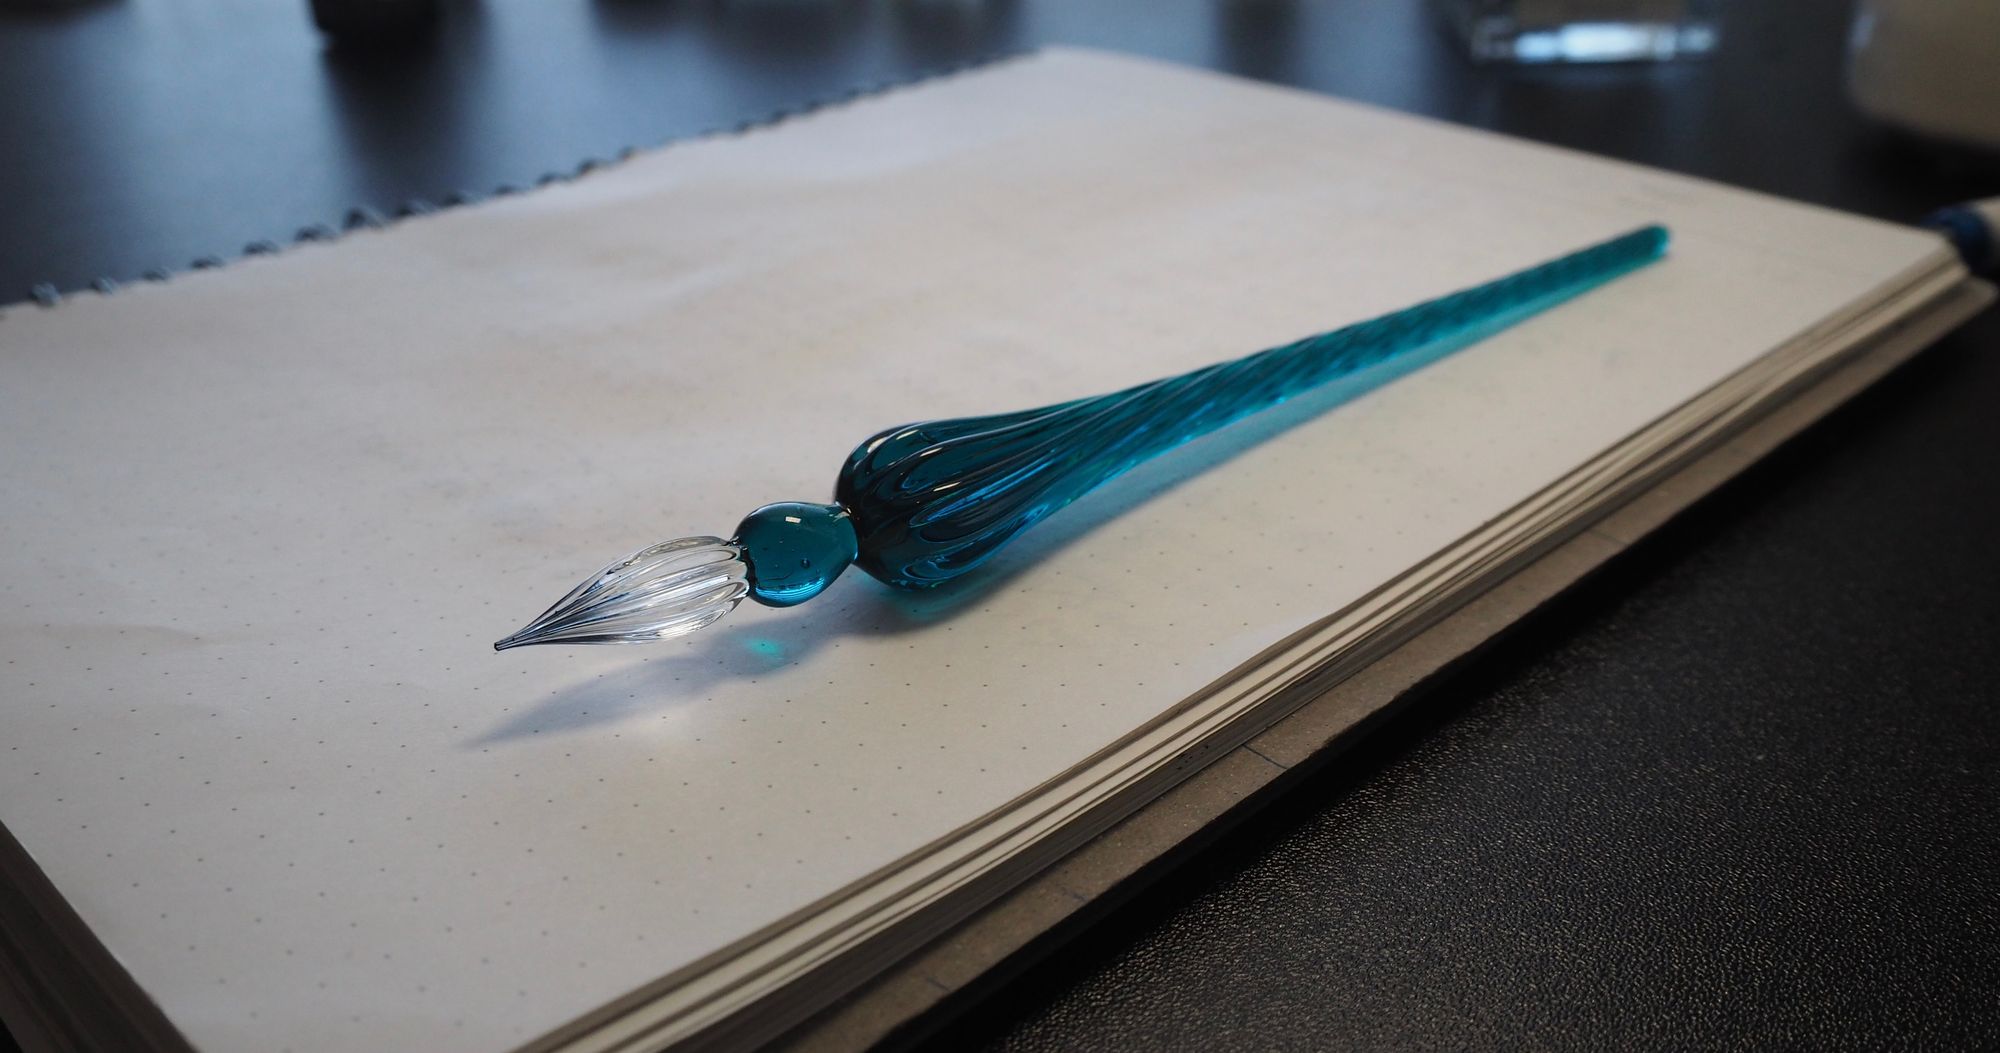 Review: J. Herbin Round Glass Dip Pen